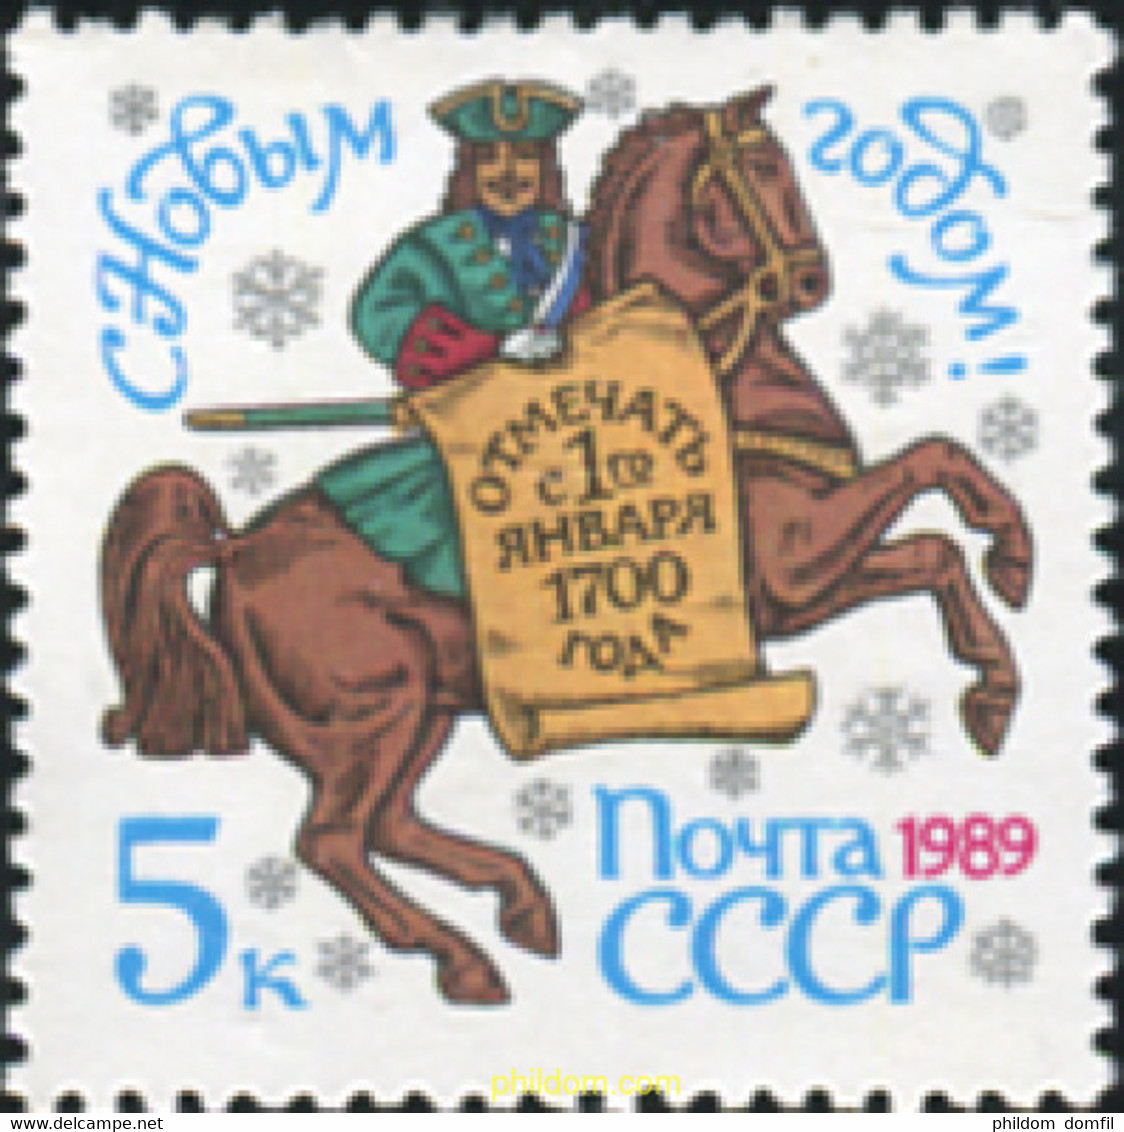 63522 MNH UNION SOVIETICA 1988 AÑO NUEVO - Colecciones